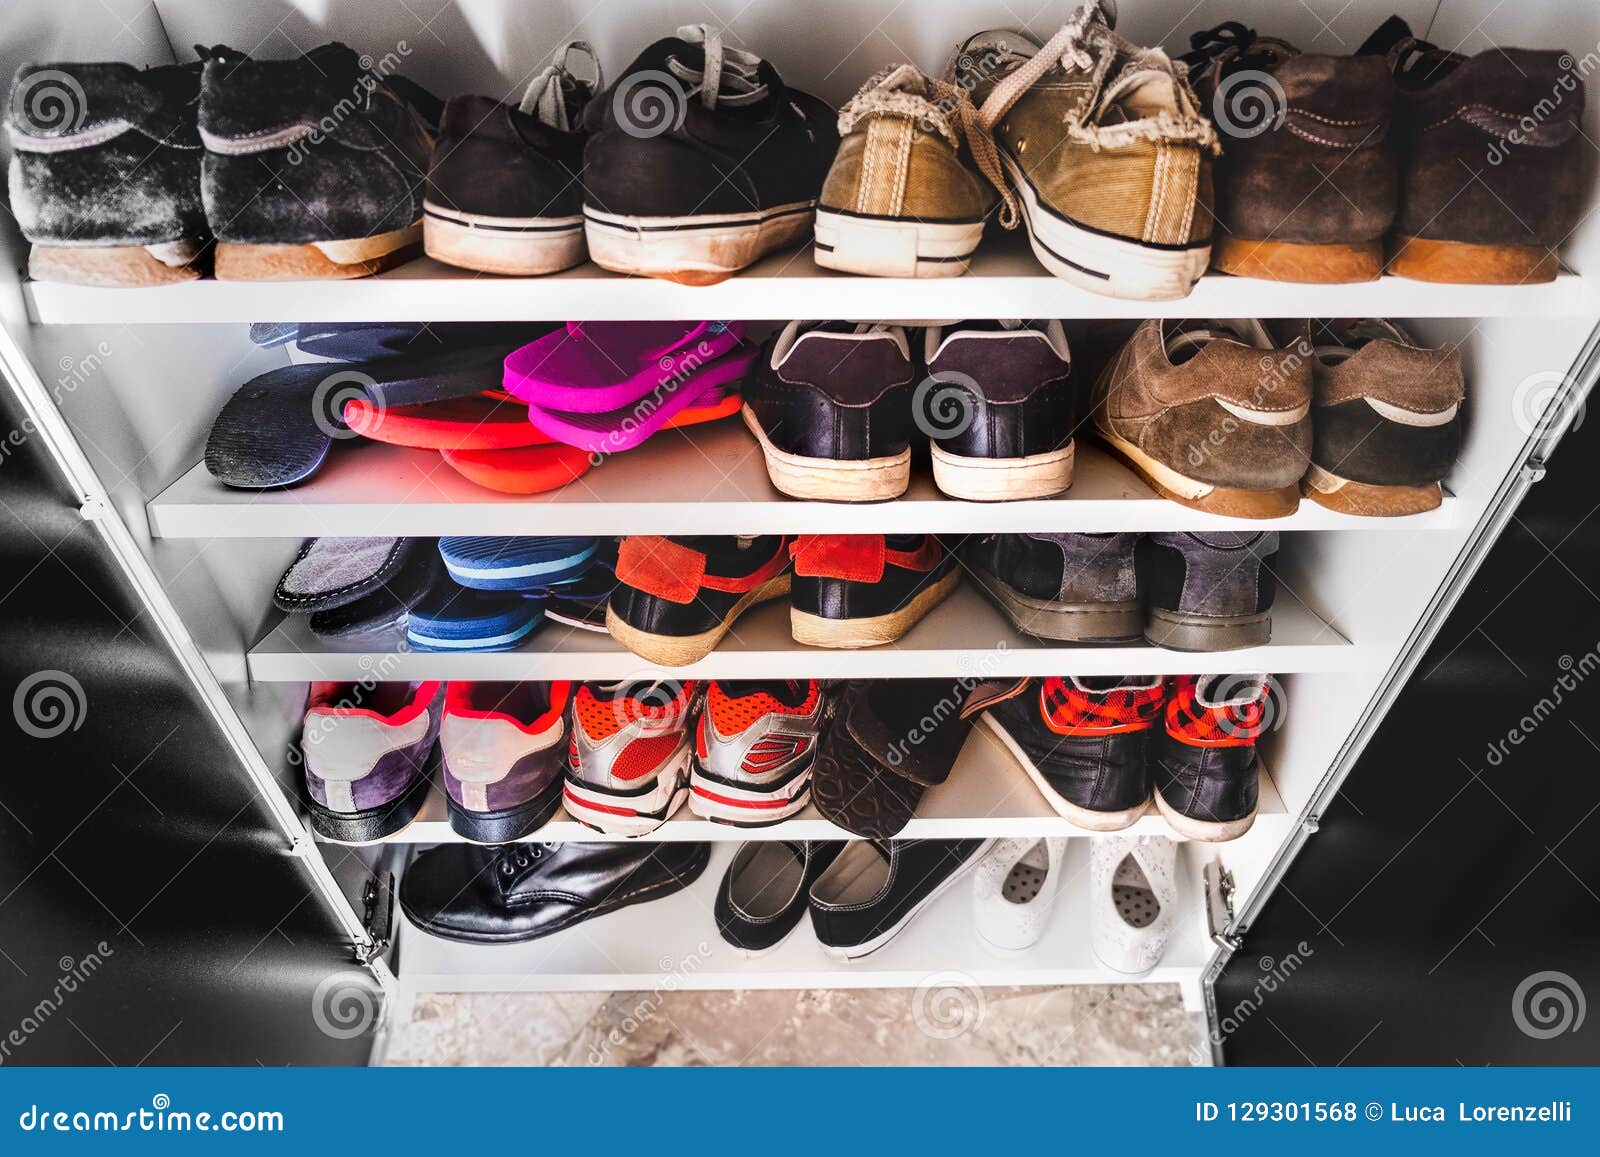 shoe rack man sneakers